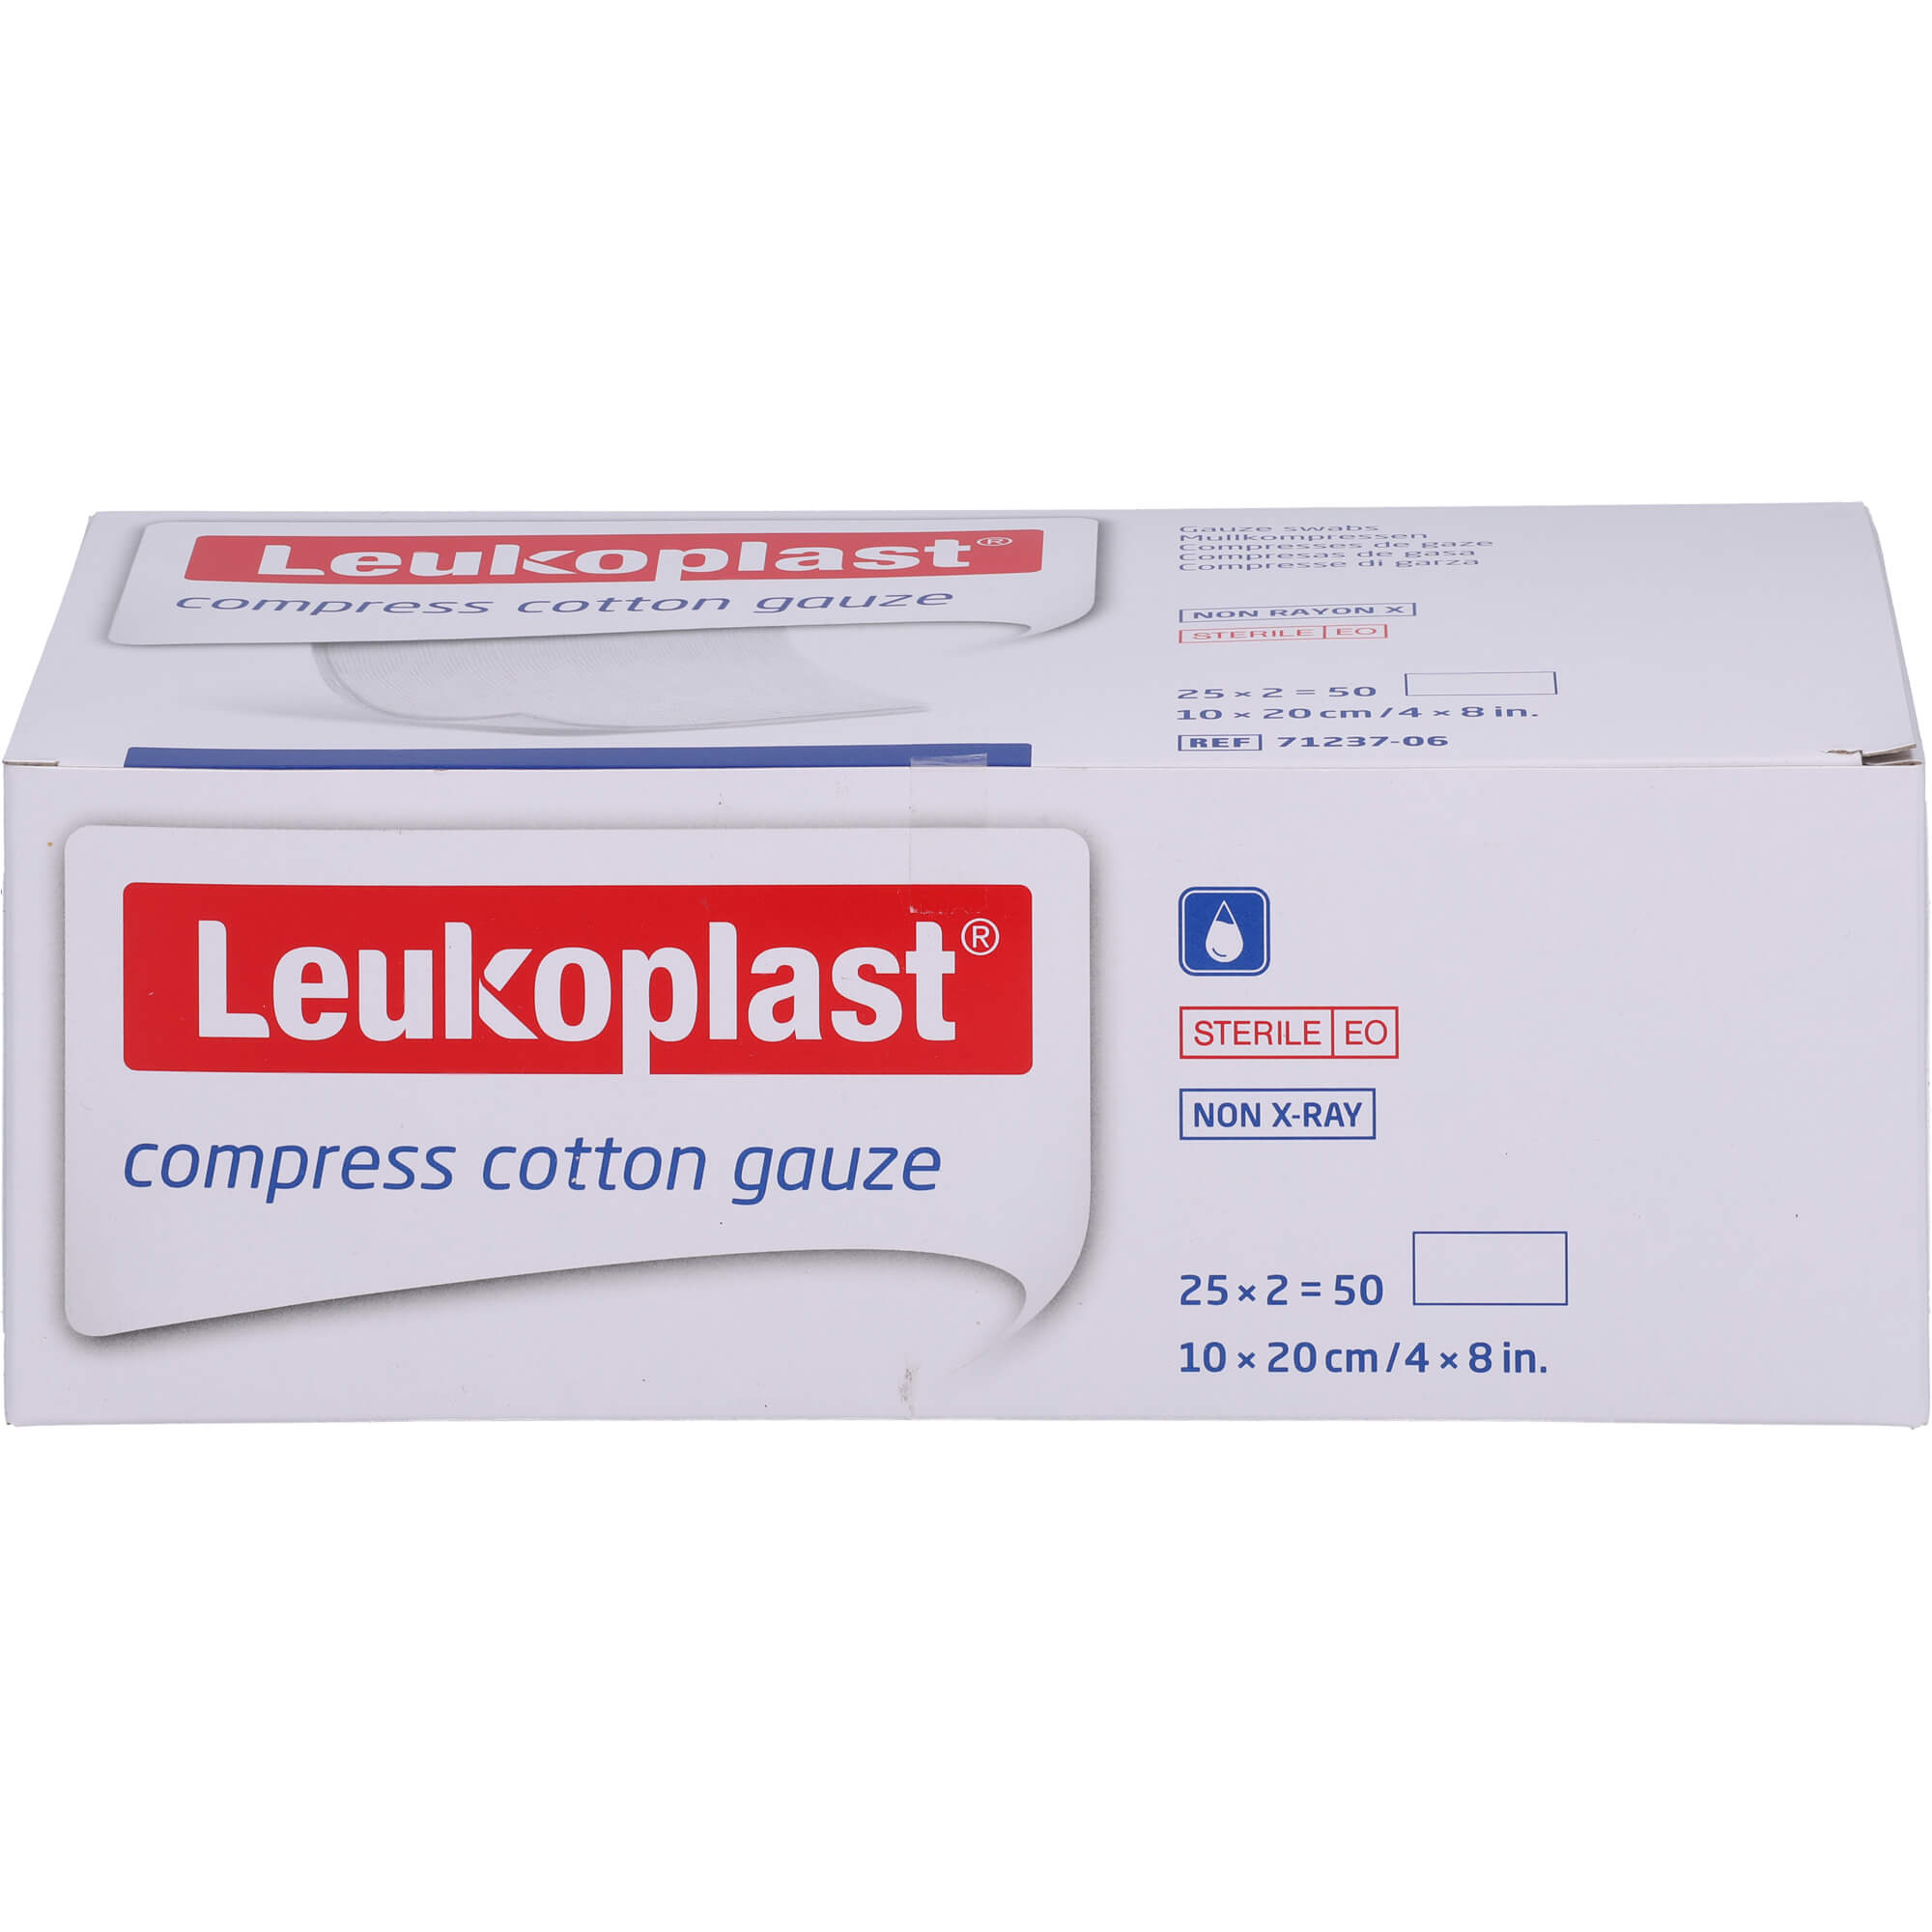 LEUKOPLAST compress Cotton Gauze 10x20cm steril 8f